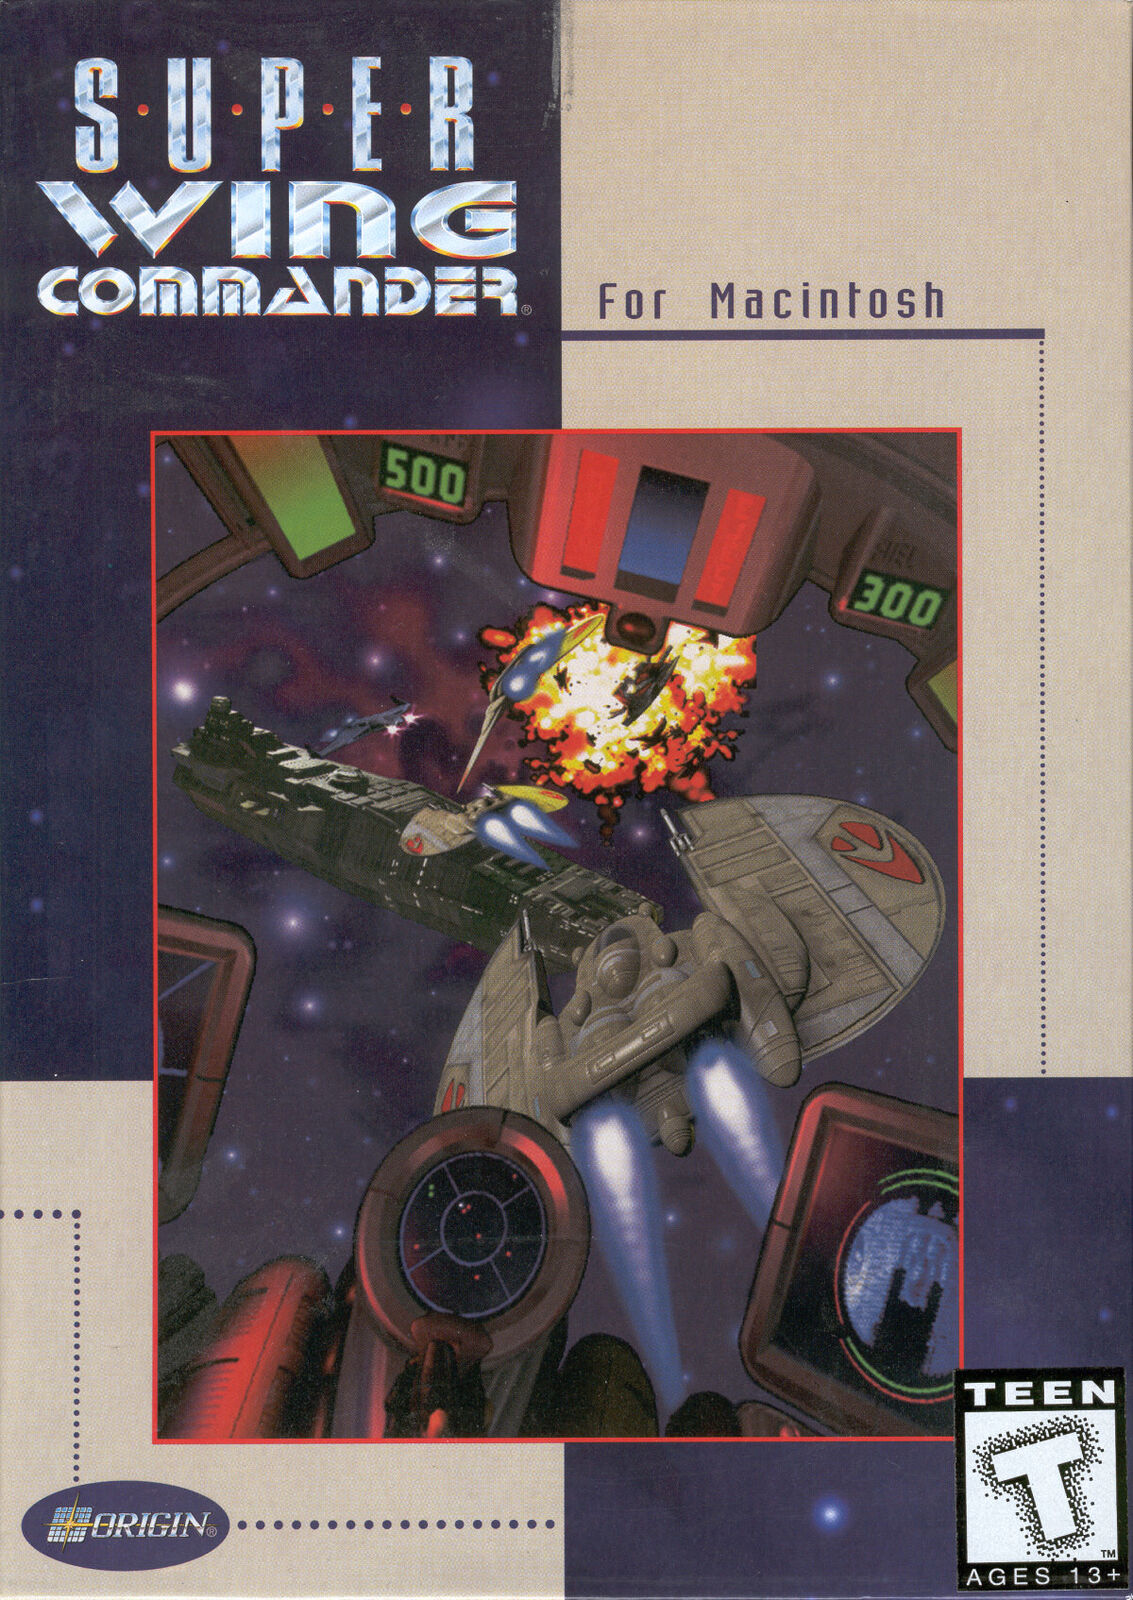 Super Wing Commander MAC CD classic space wingman shooter combat simulation game